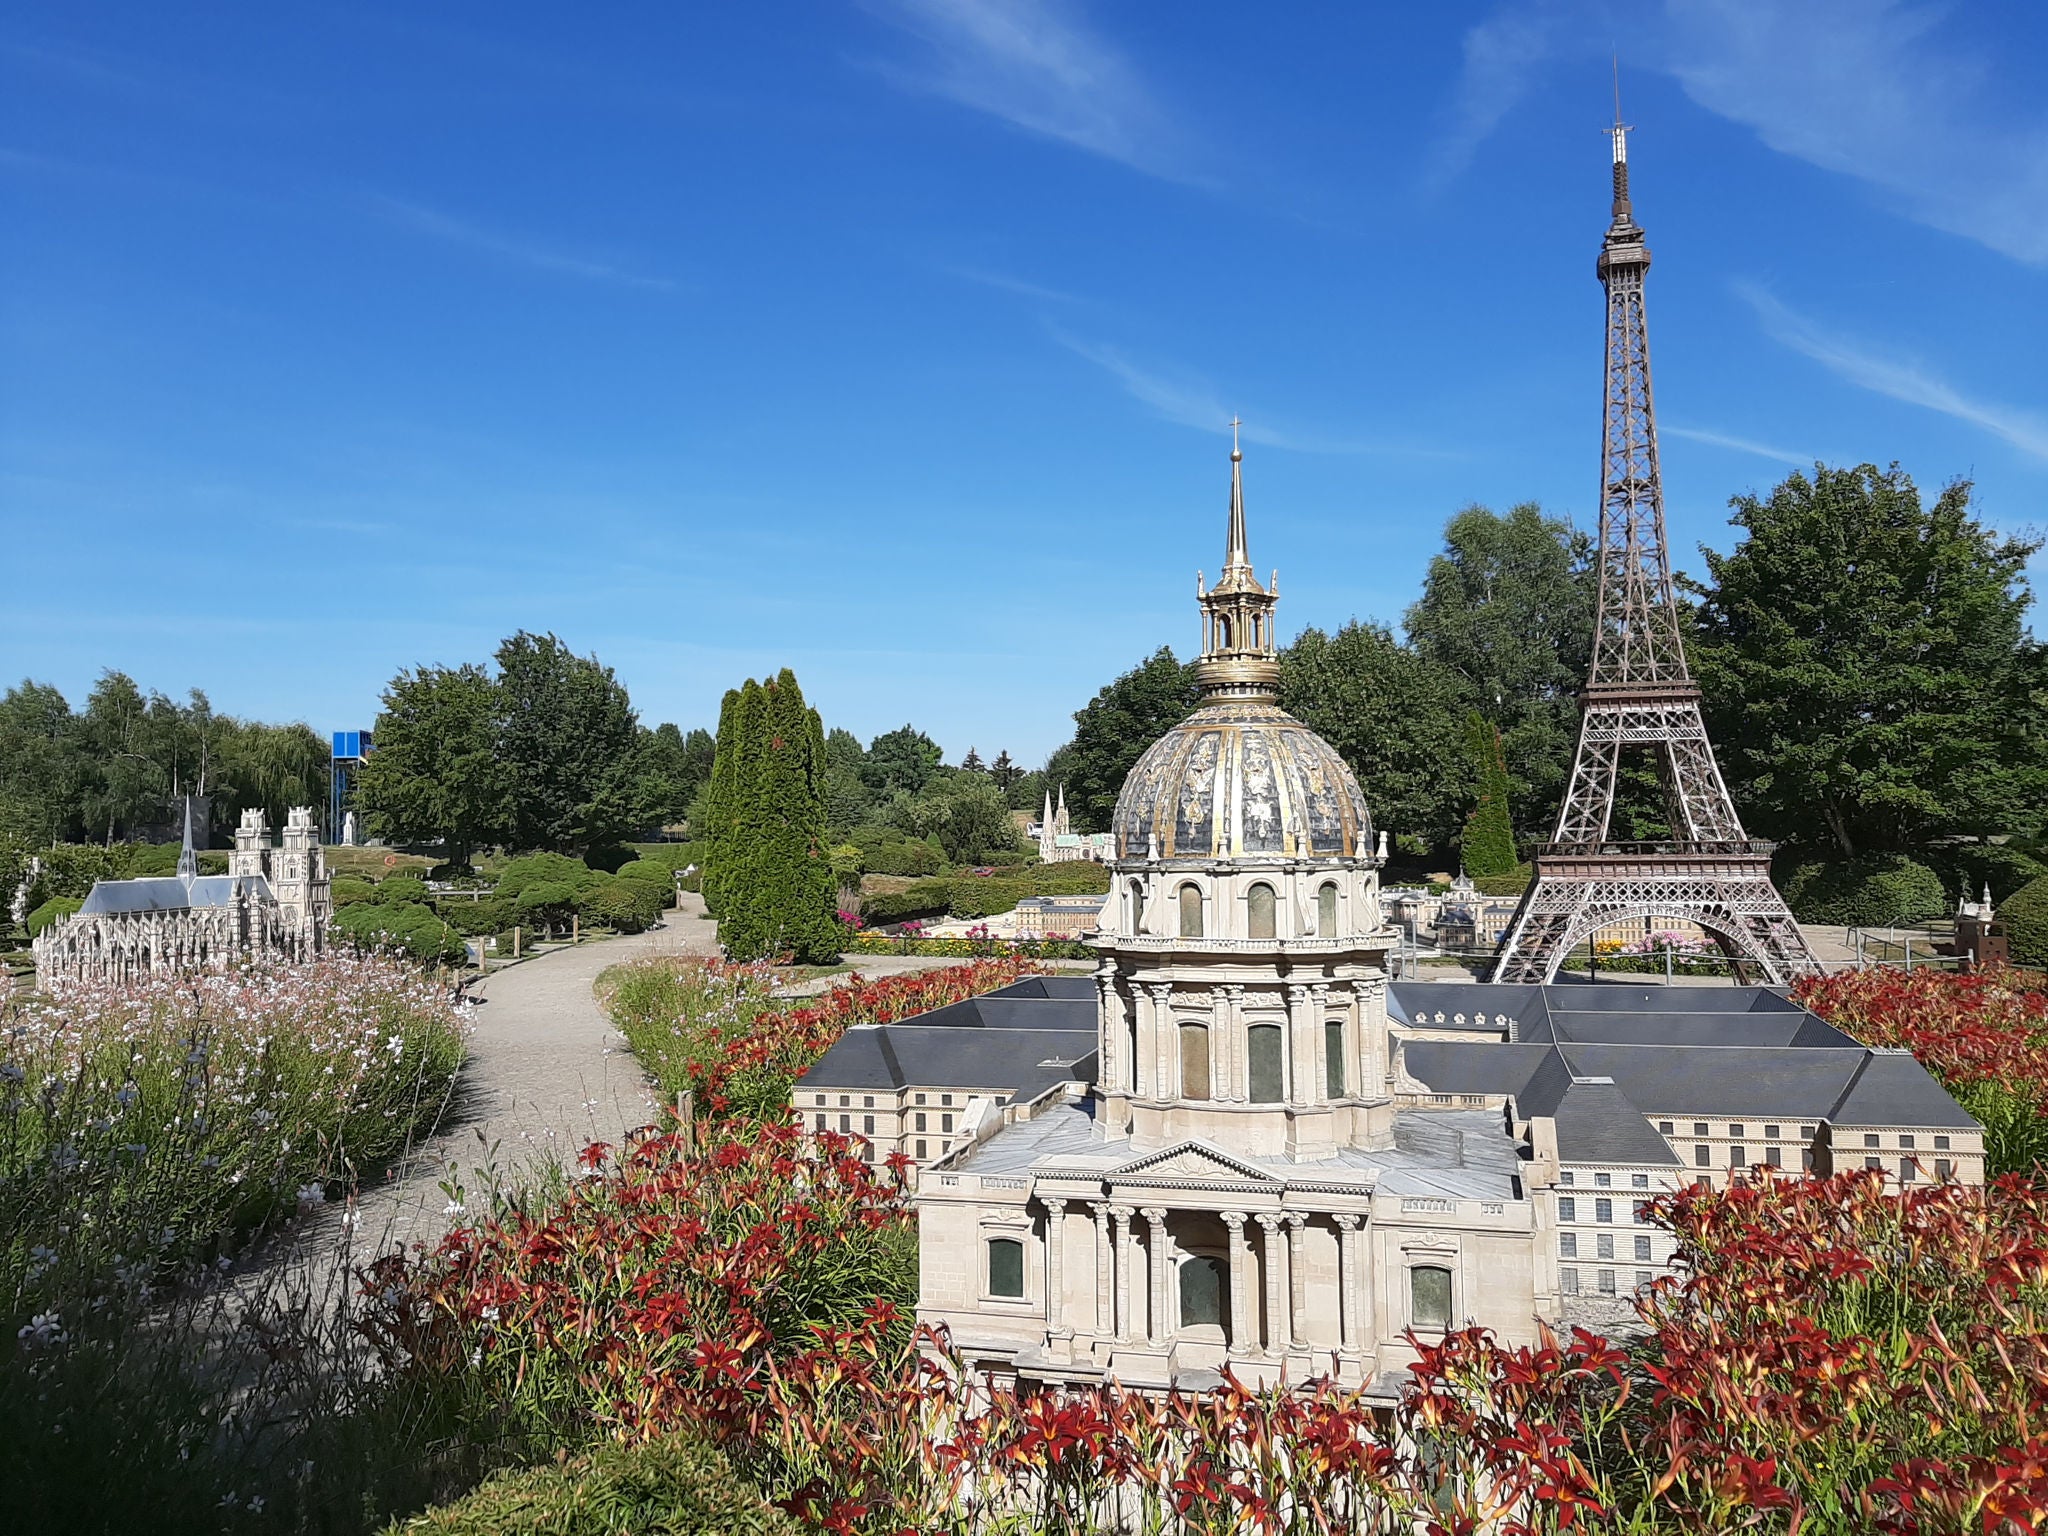 Miniature version of famous monuments at Paris in France Miniature